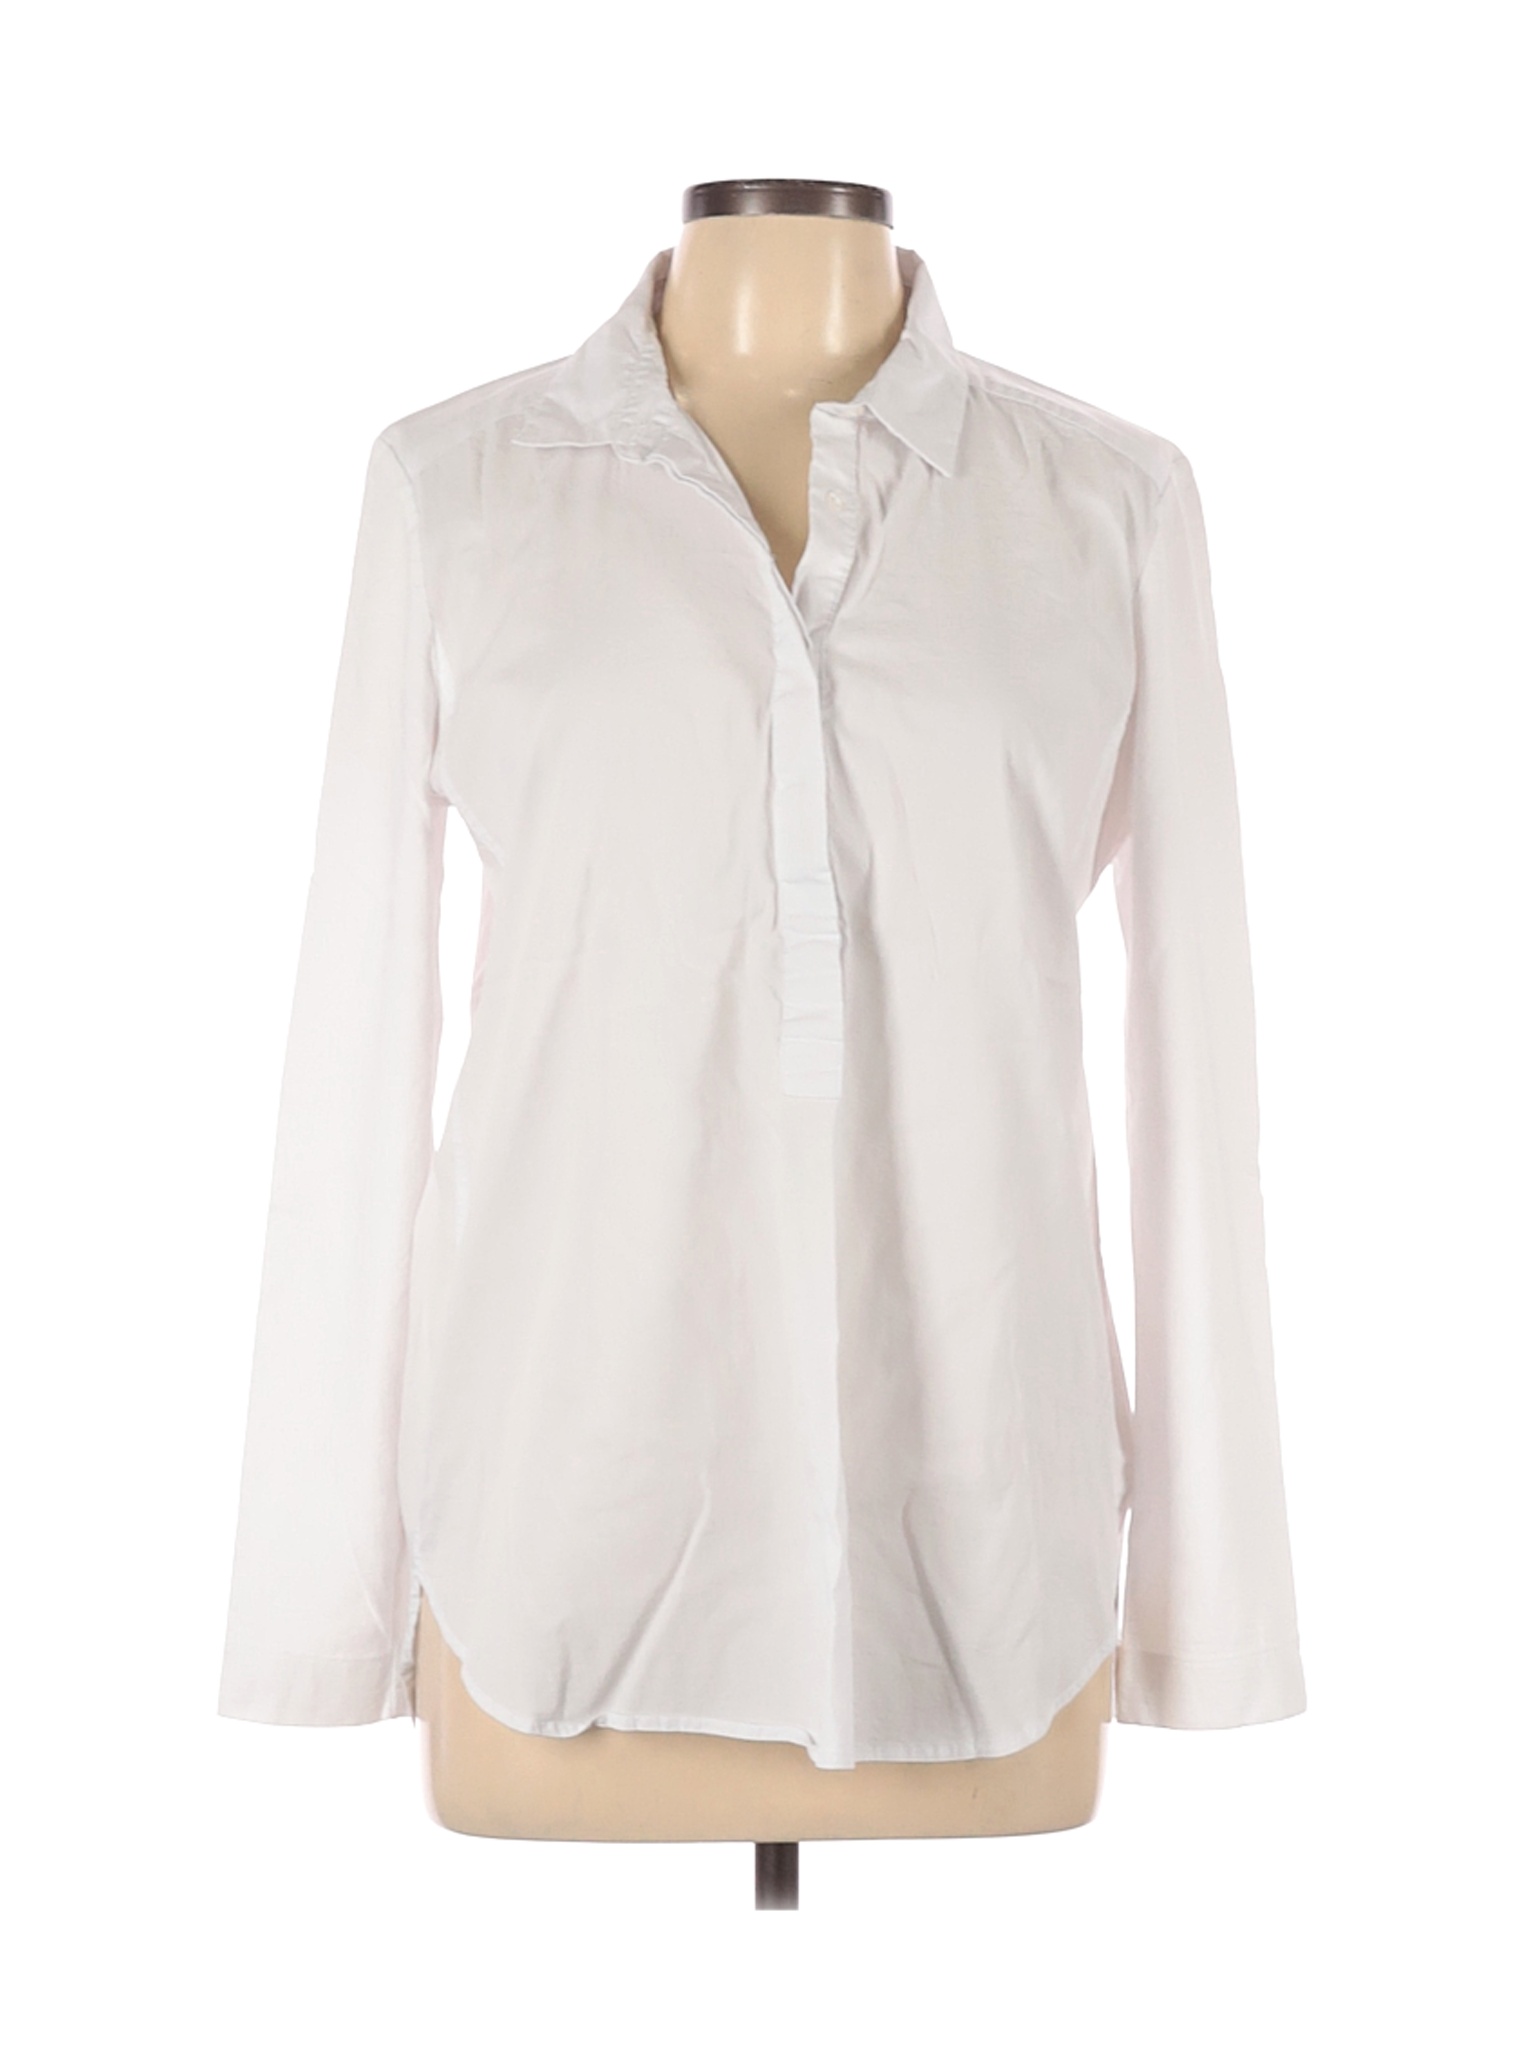 English Laundry Women White Long Sleeve Button-Down Shirt L | eBay